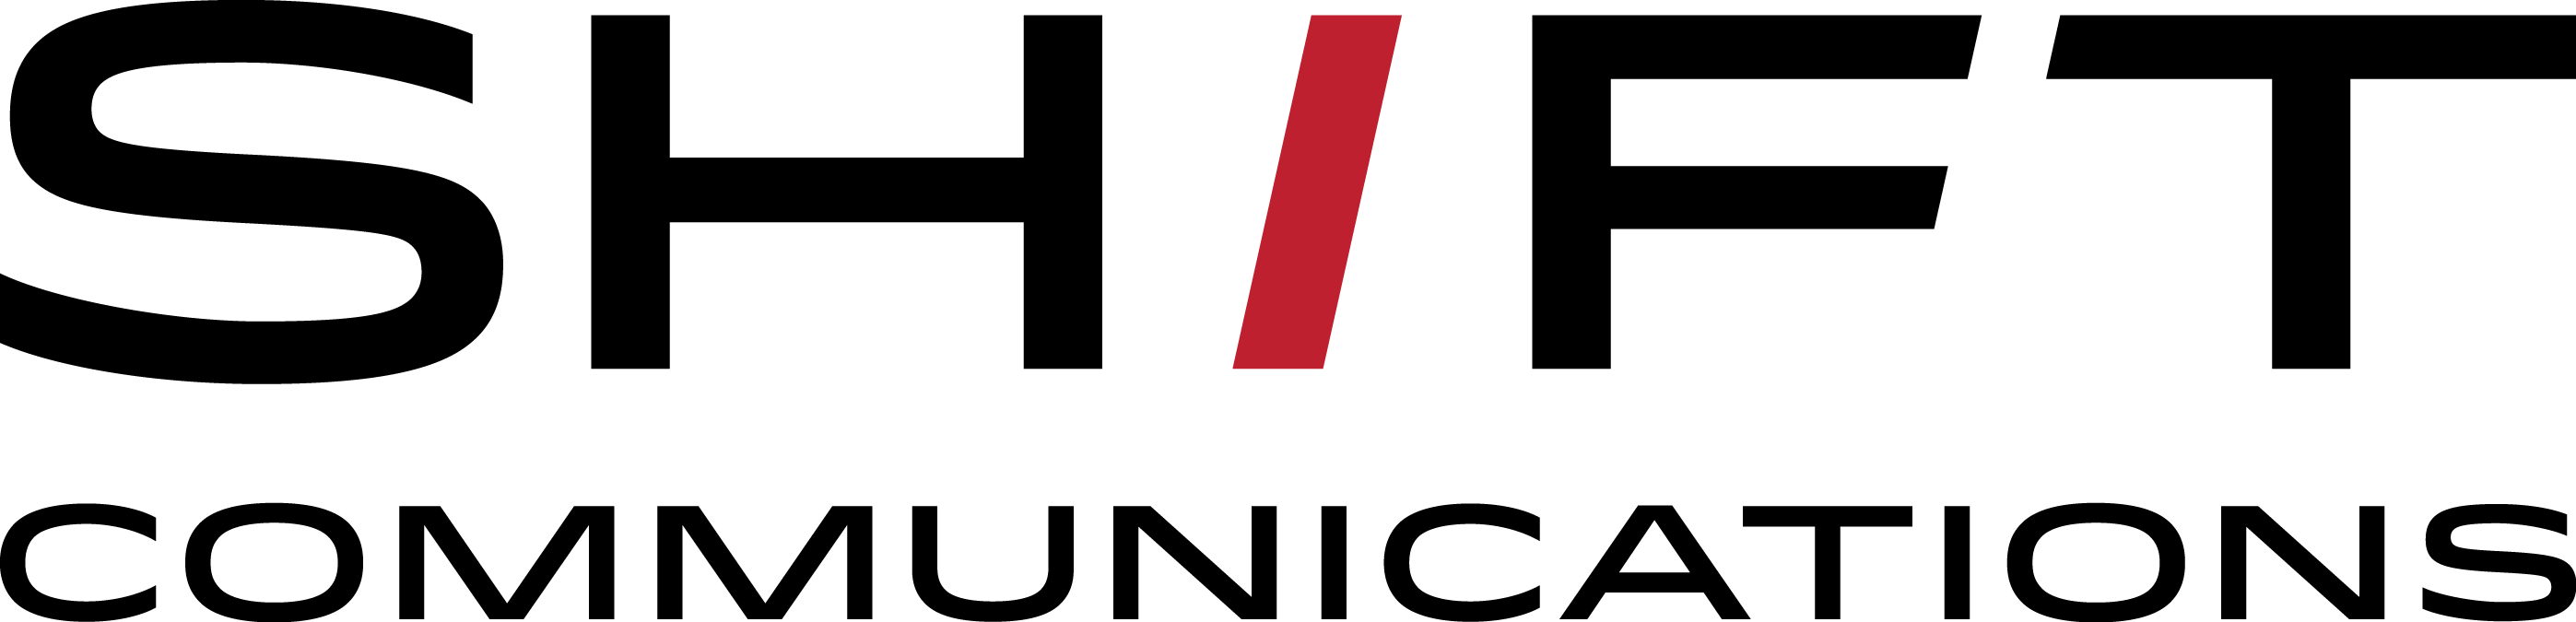 The HIMSS Social Media Ambassador Program - Logo - https://s41078.pcdn.co/wp-content/uploads/2018/11/Community-Engagement-2.0.png